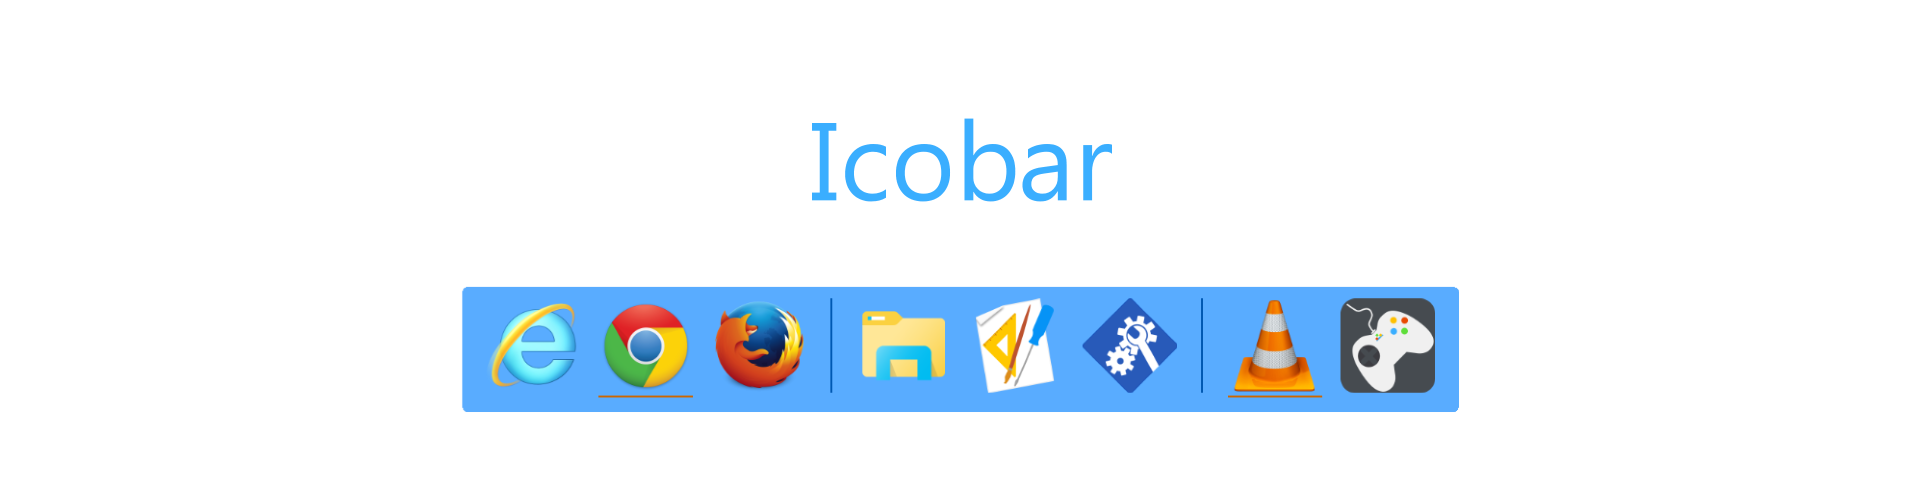 Icobar Intro Image